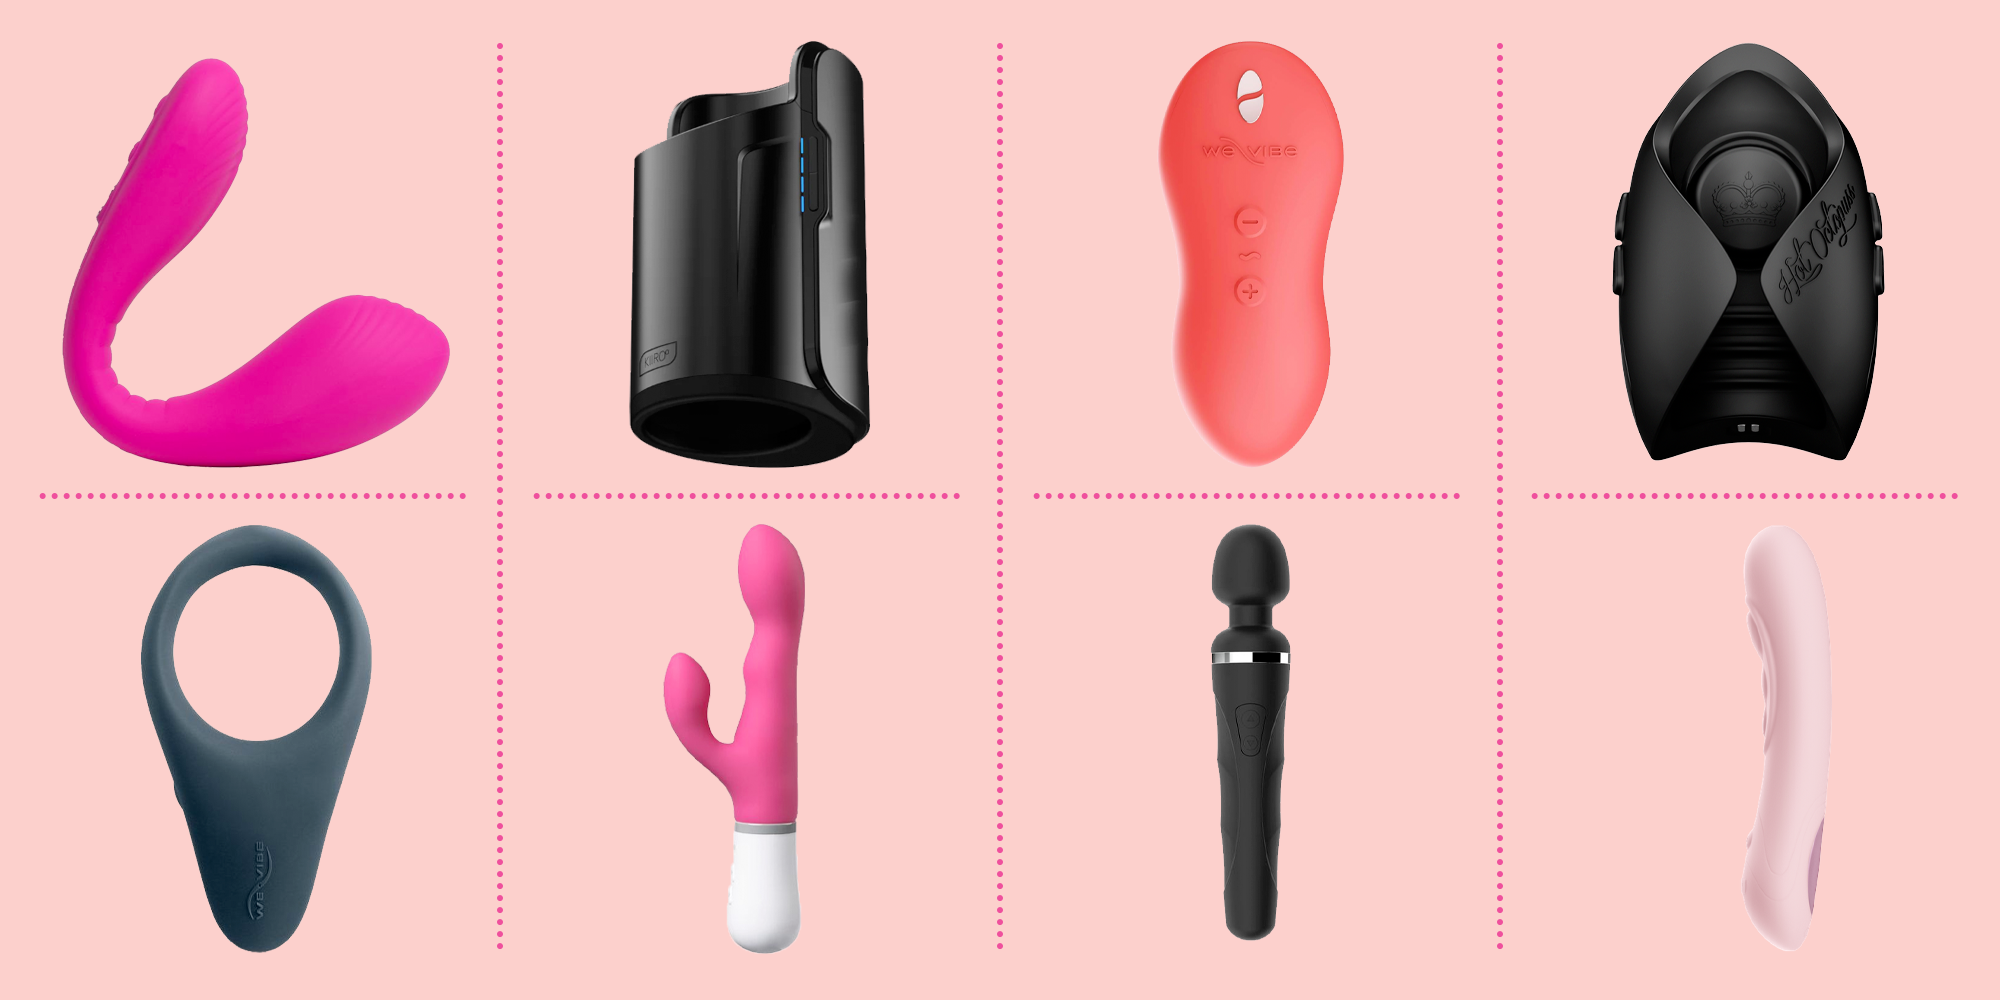 best sellers remote control underwear vibrators